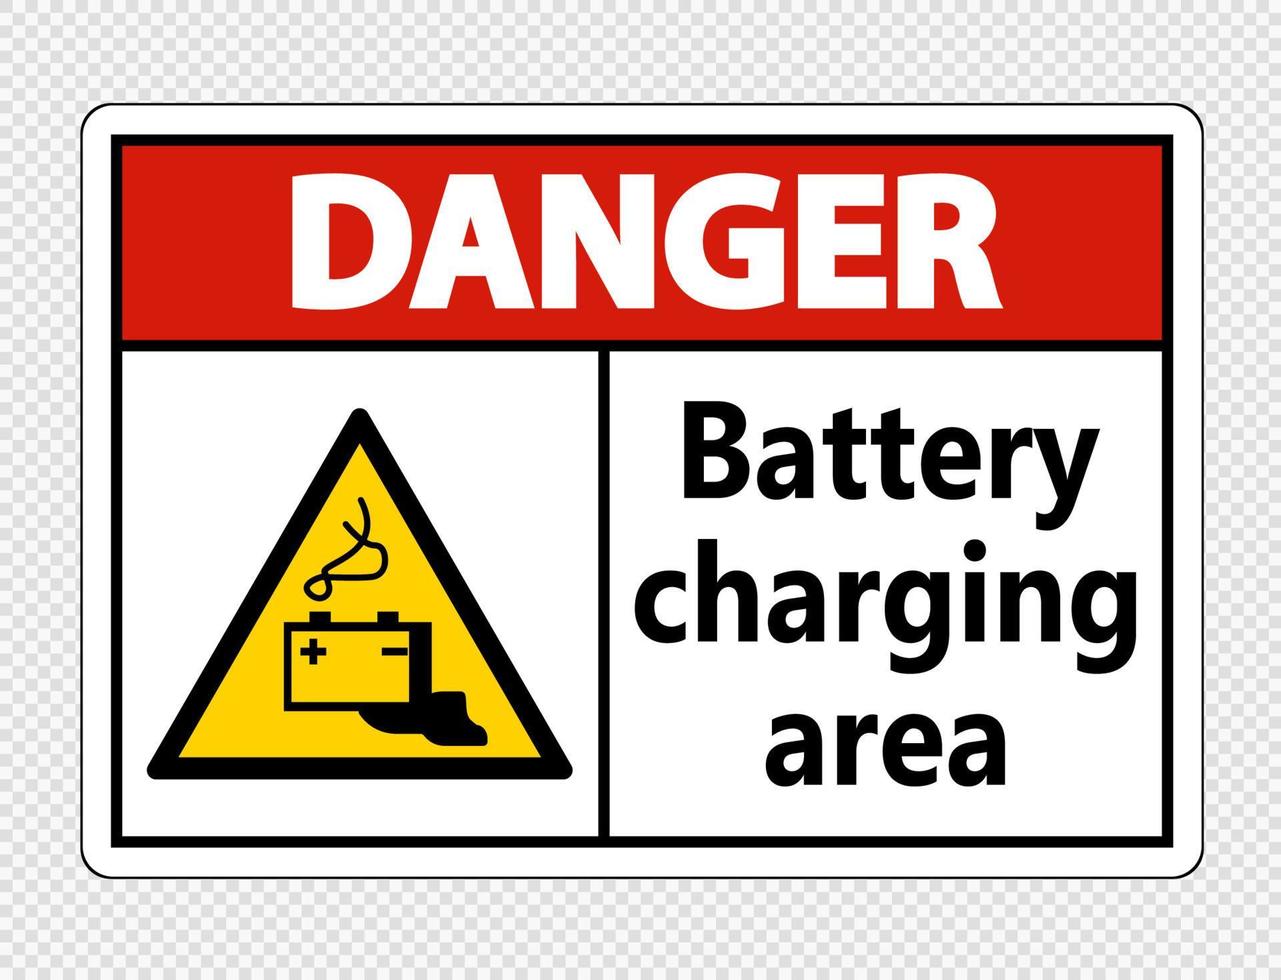 Danger battery charging area Sign on transparent background vector